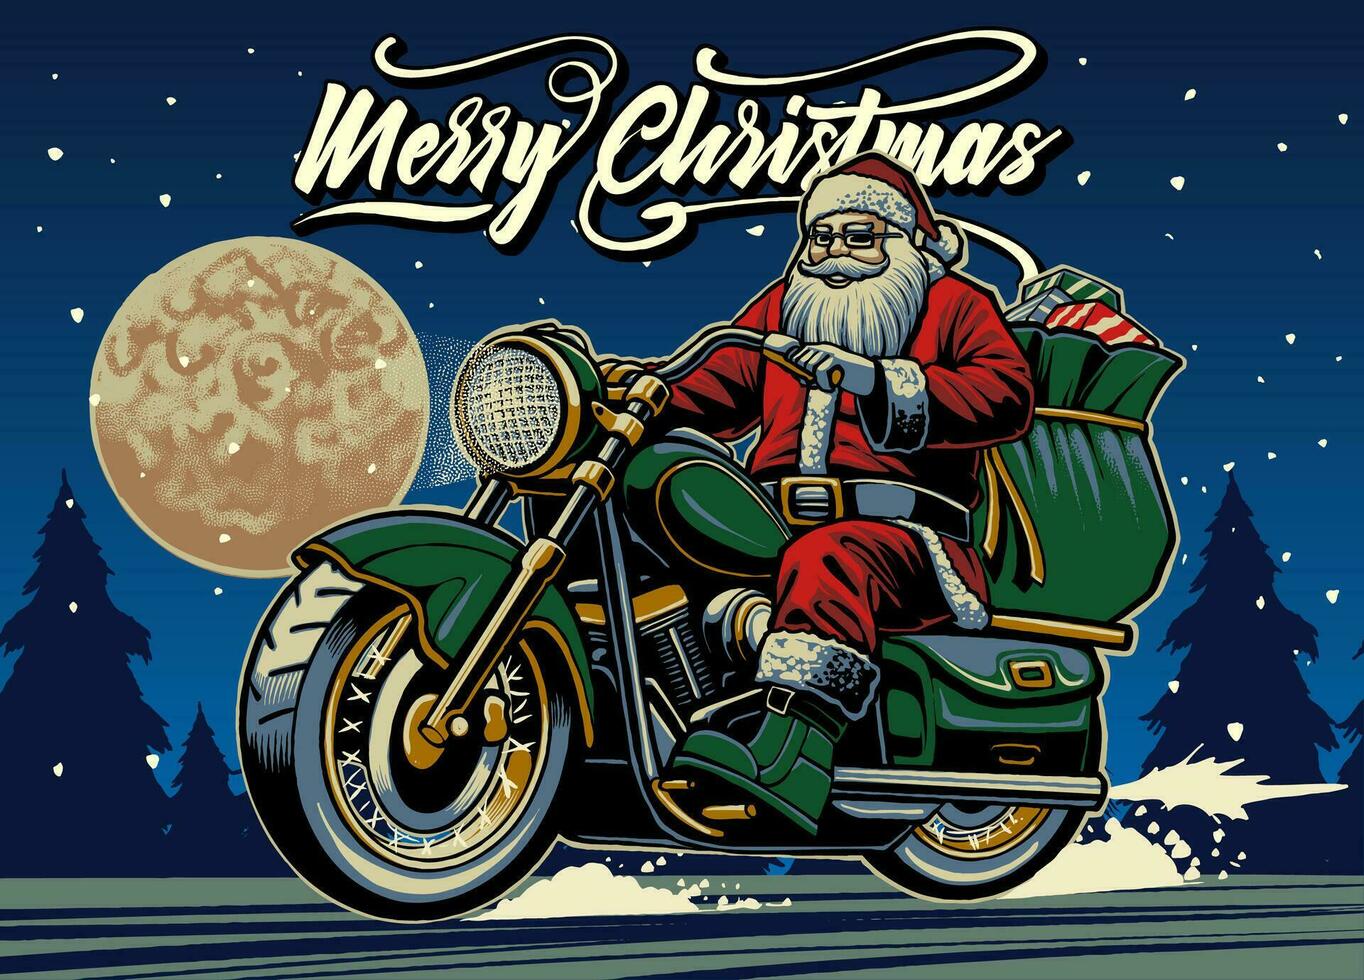 santa claus riding motorcycle illustration vector